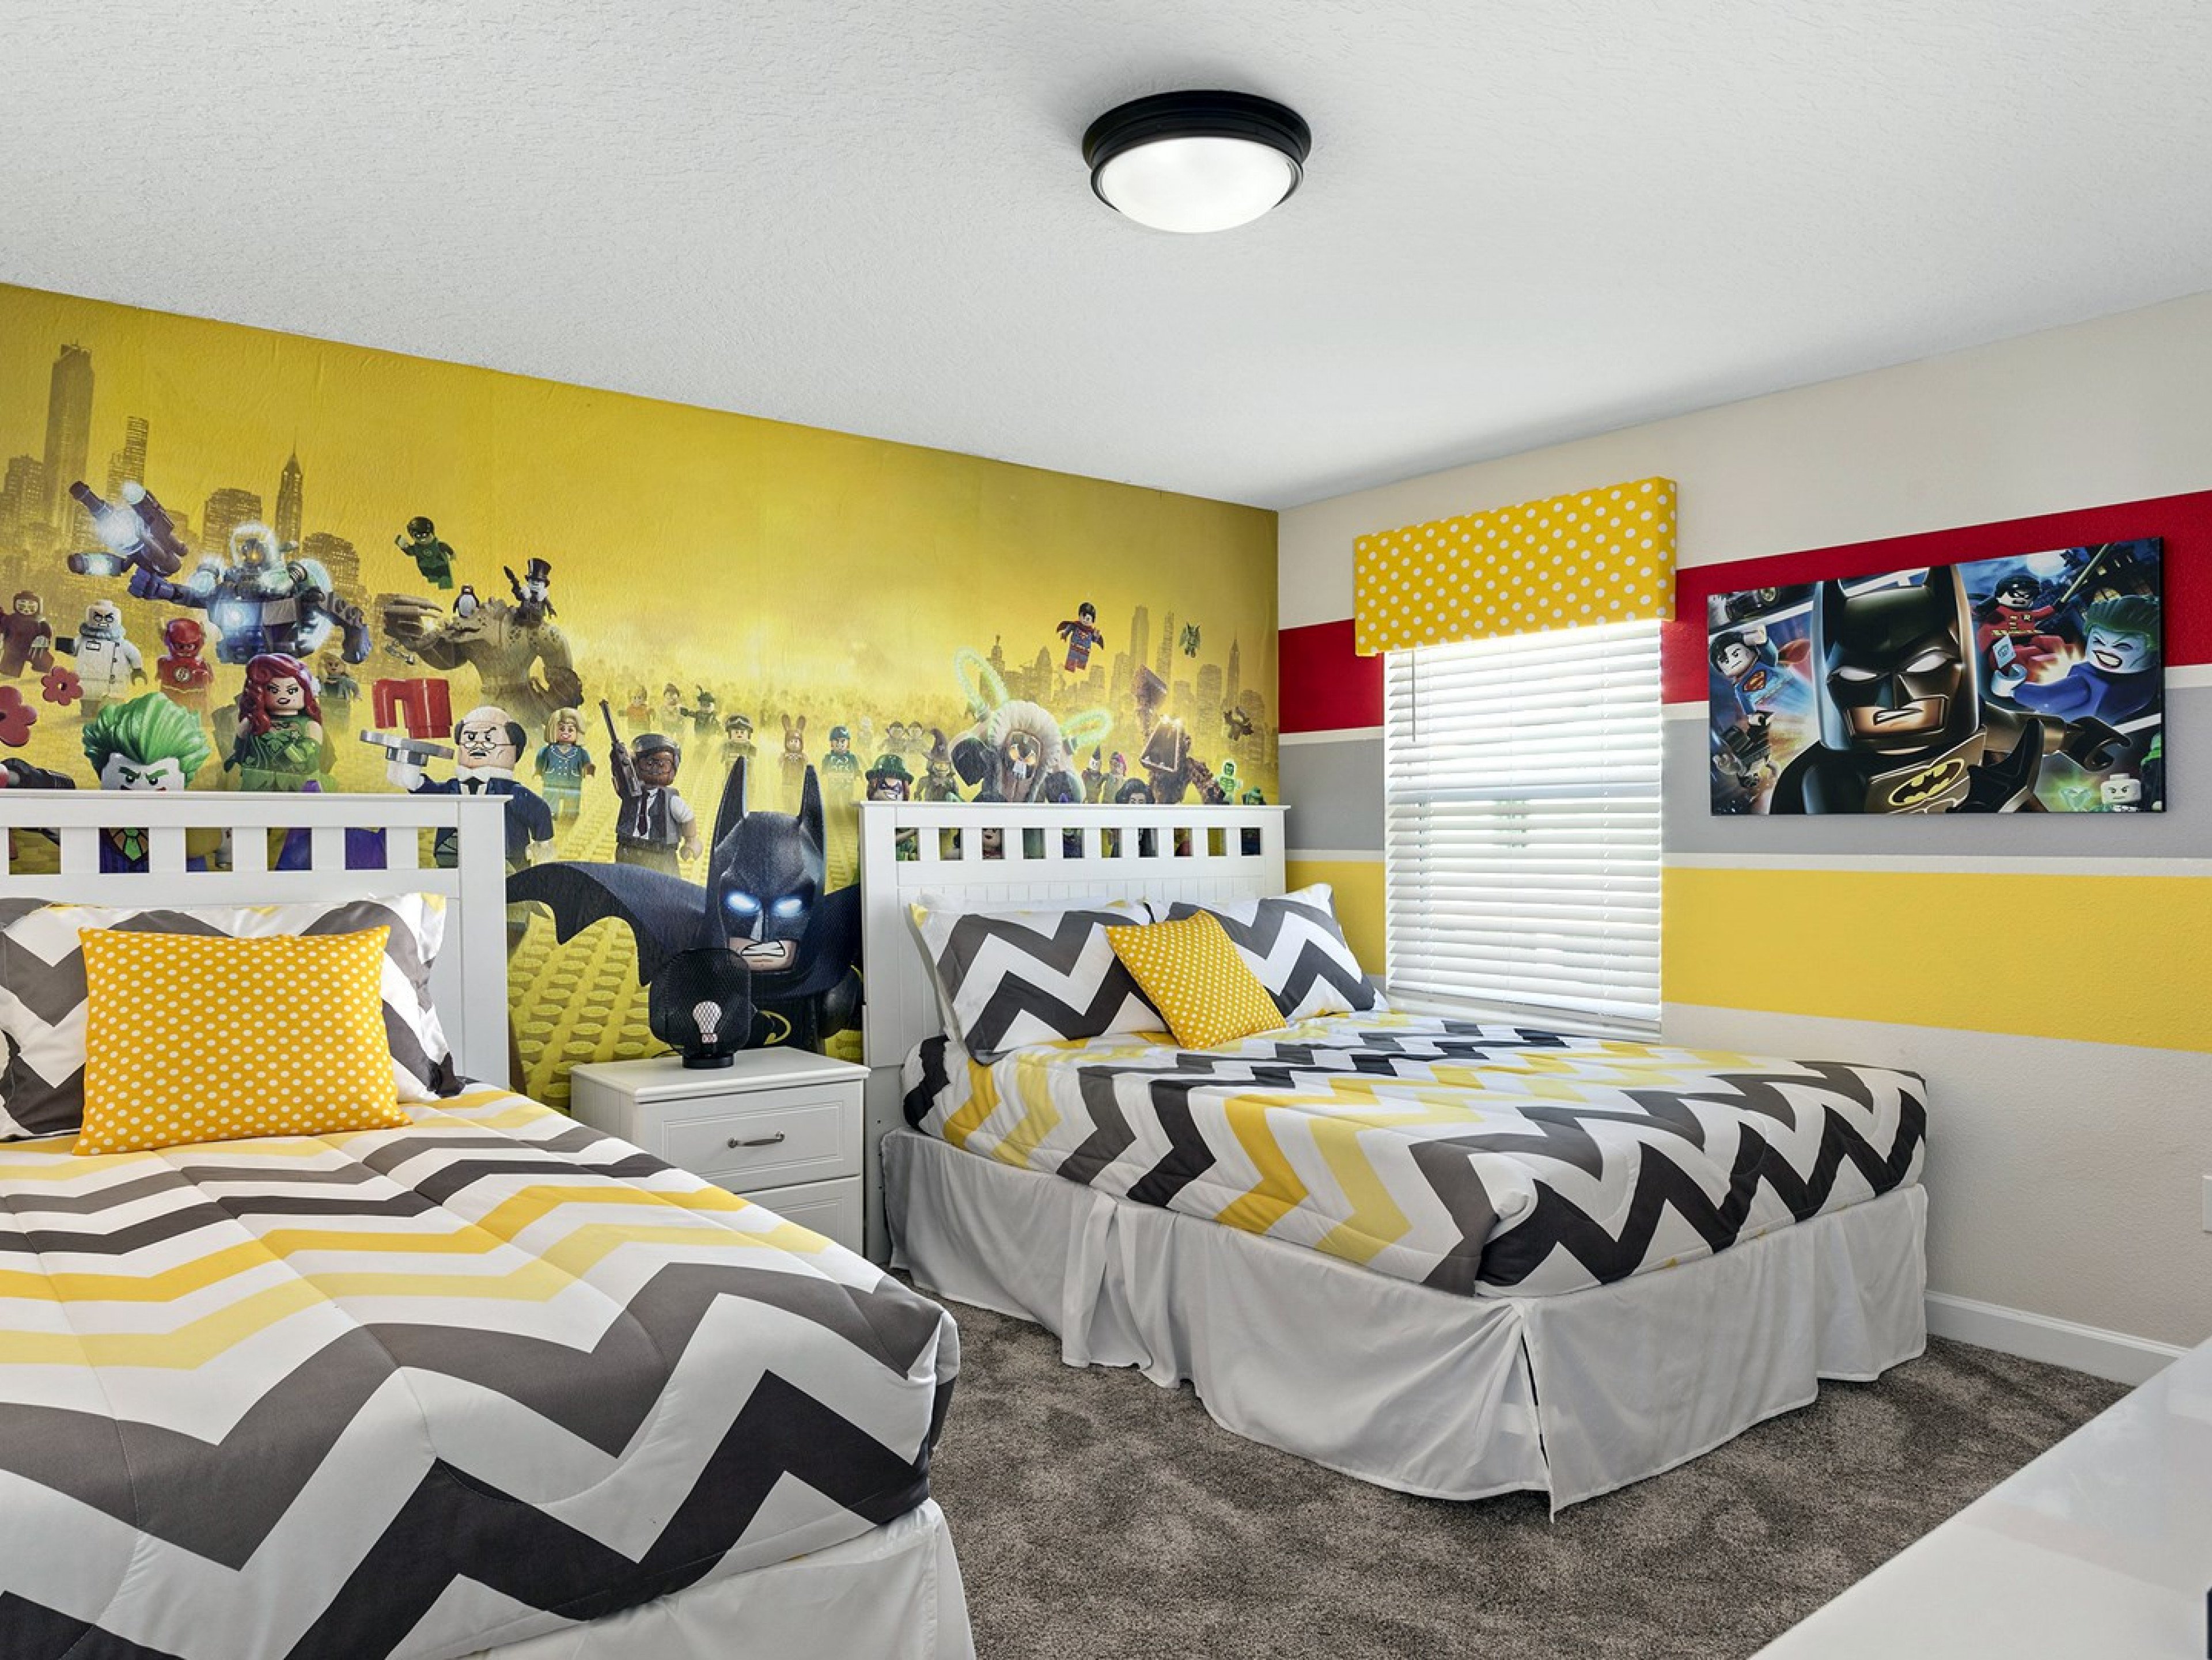  Orlando homes with Legoland-themed rooms - Storey Lake Resort 711